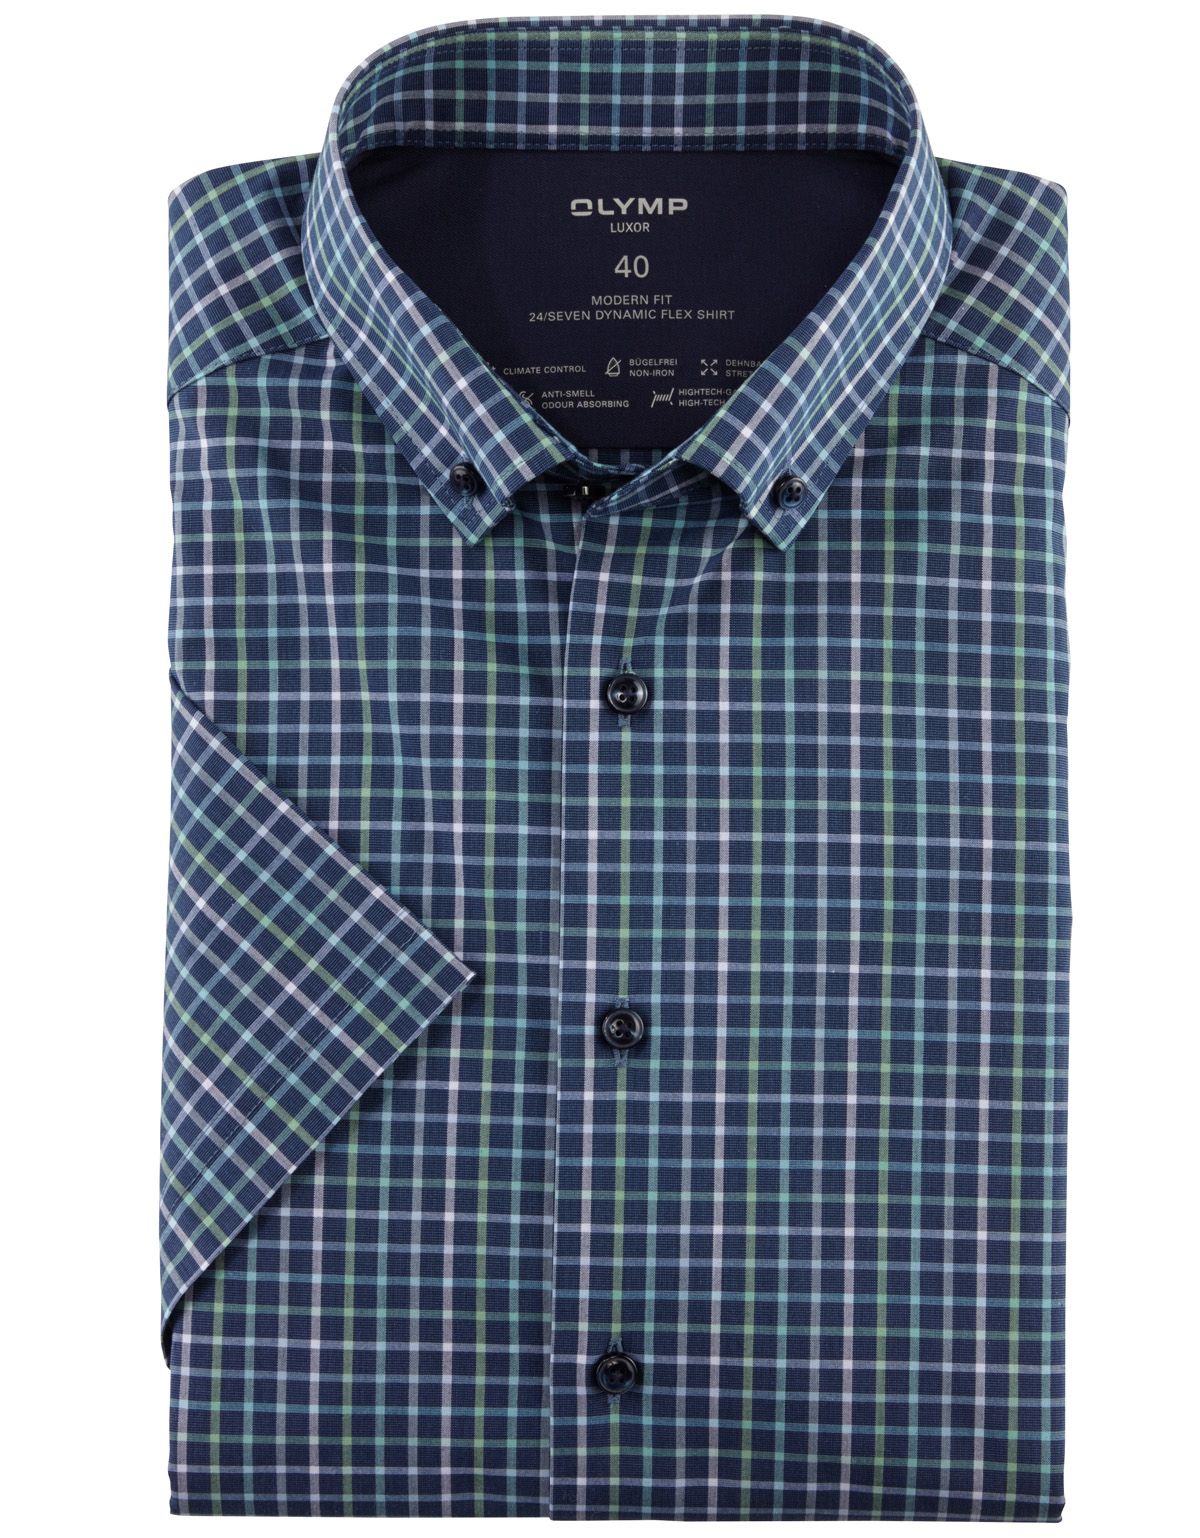 Рубашка в клетку с пуговицами на воротнике OLYMP Luxor 24/7, modern fit[Синий]